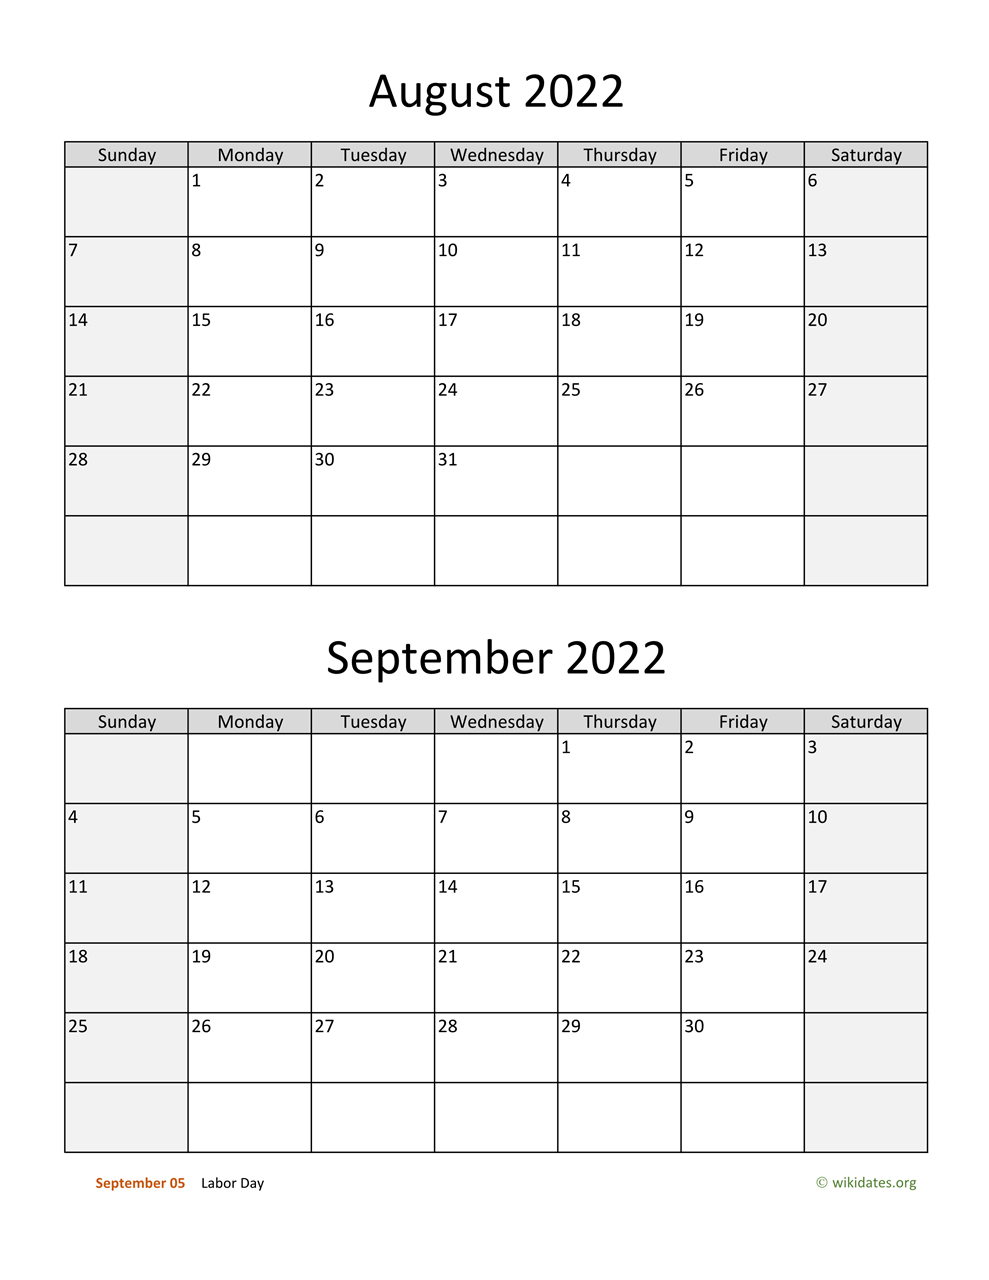 August And September 2022 Calendar | Wikidates